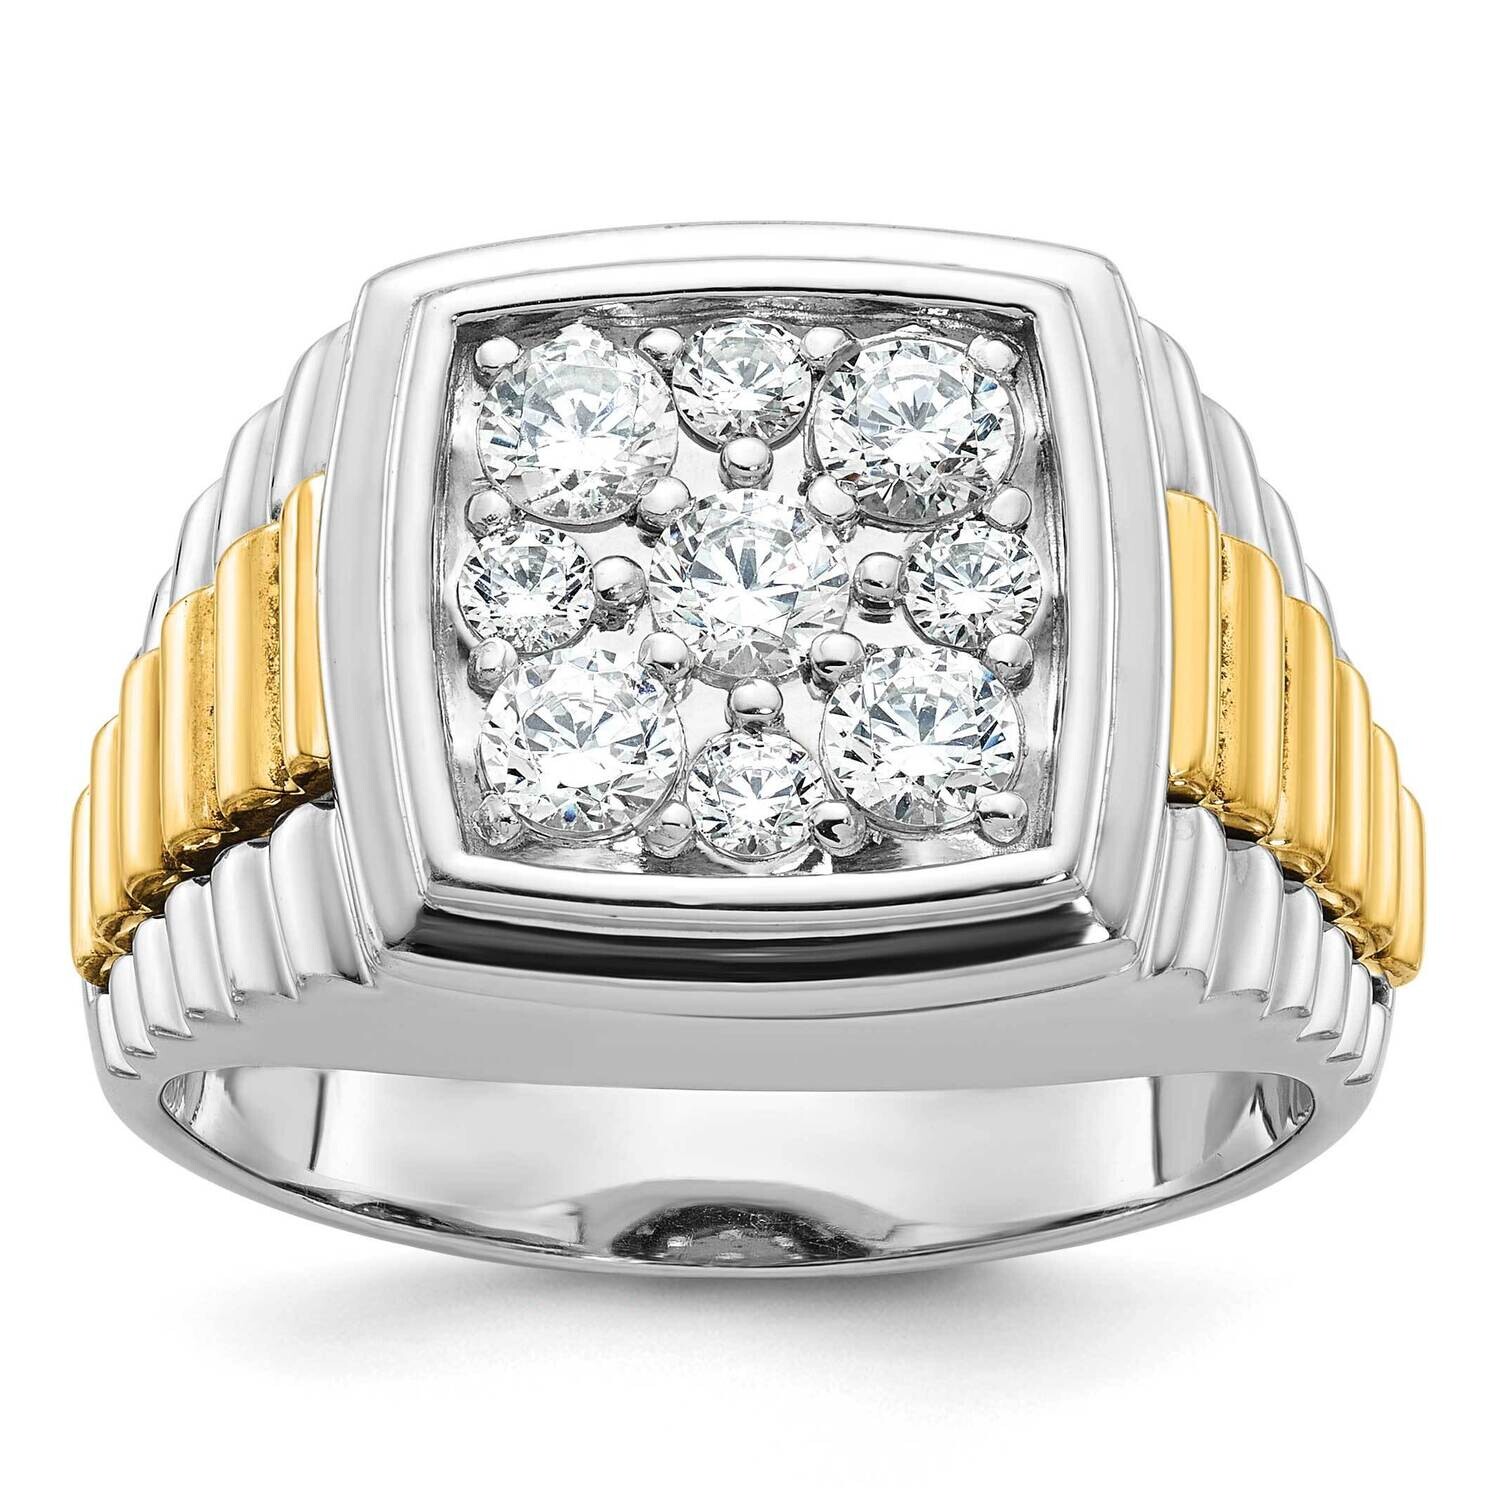 Ibgoodman Men's Polished Textured 1 Carat Aa Quality Diamond Cluster Ring 14k Two-Tone Gold B58299-4WYAA